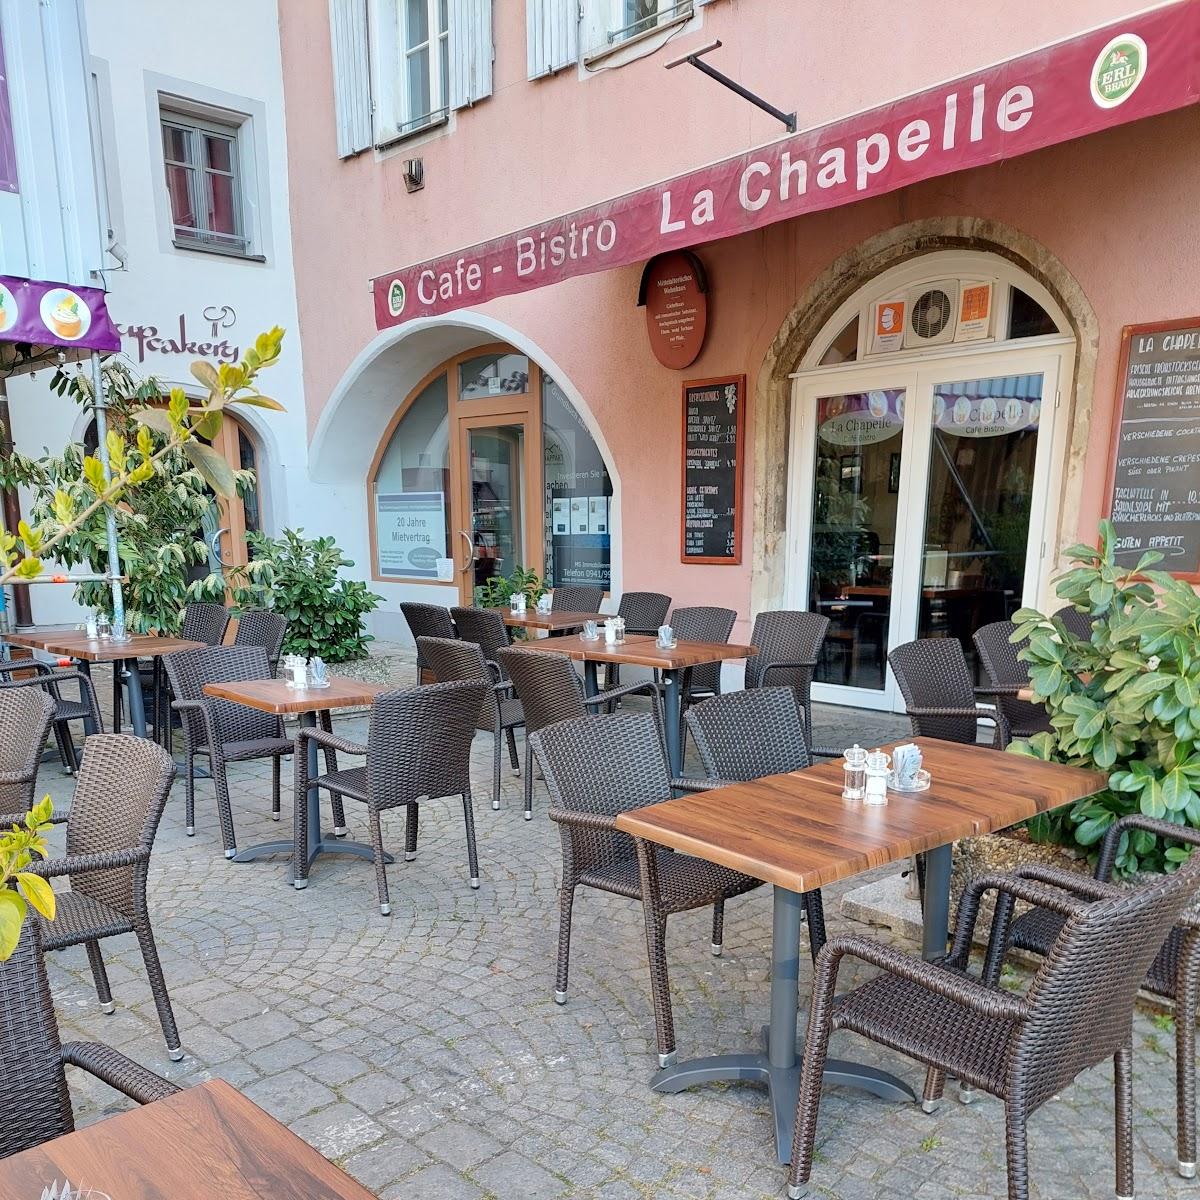 Restaurant "Café Bistro La Chapelle" in Regensburg